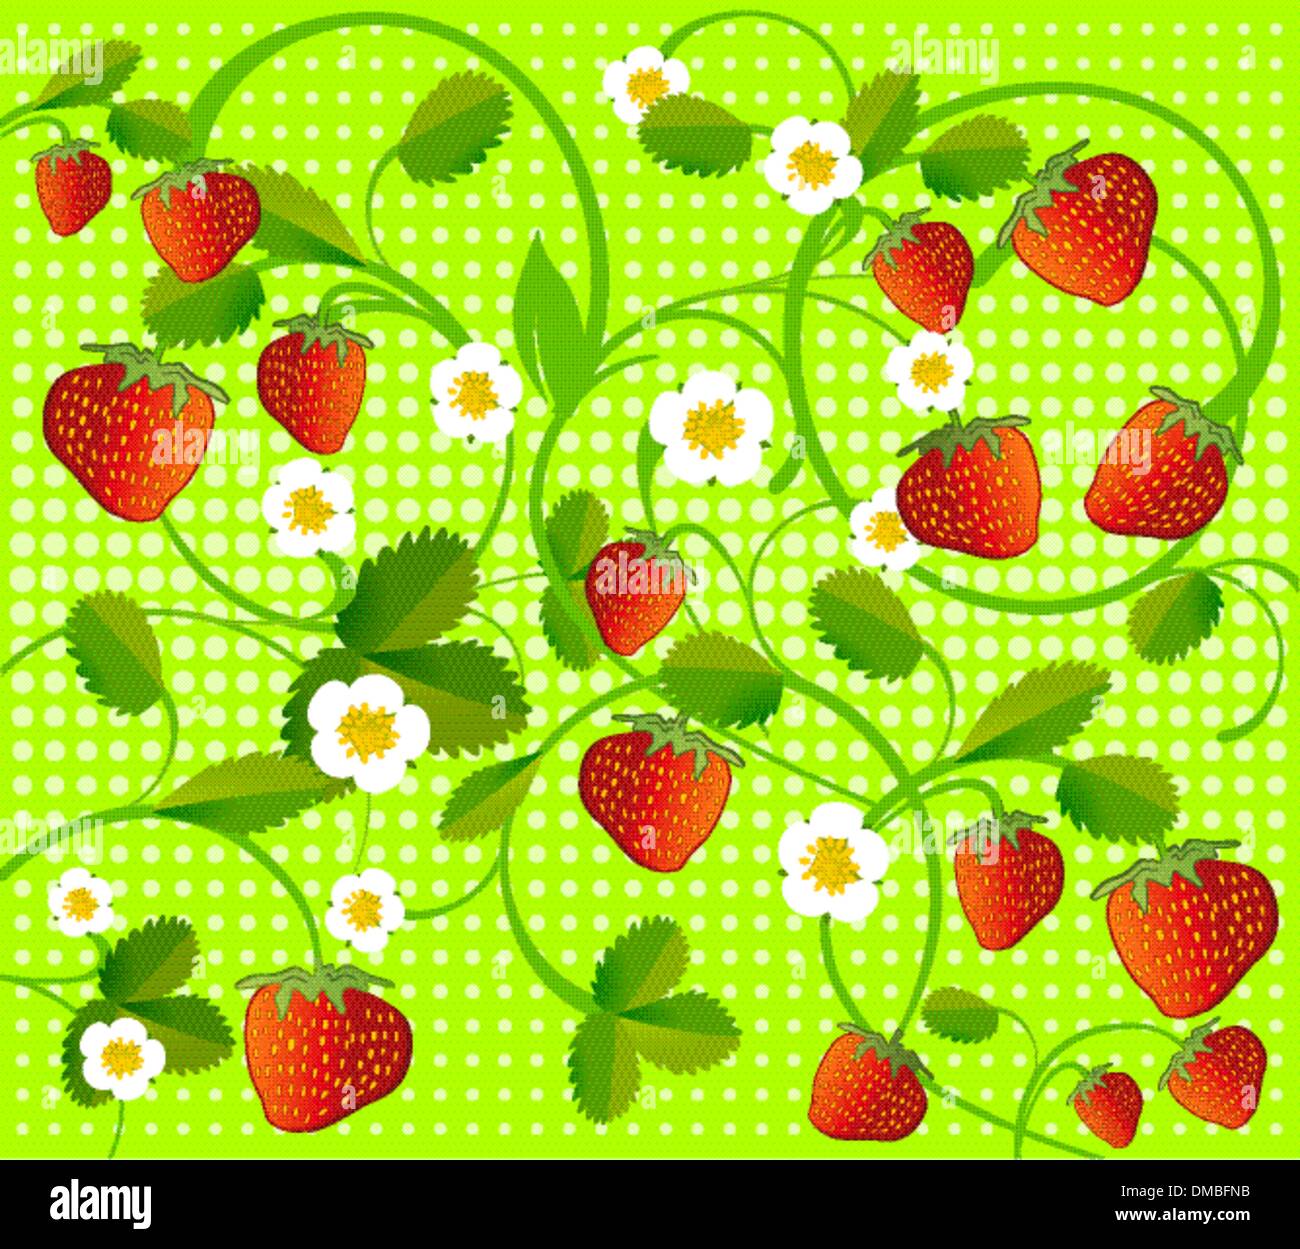 Erdbeere auf grün Stock Vektor